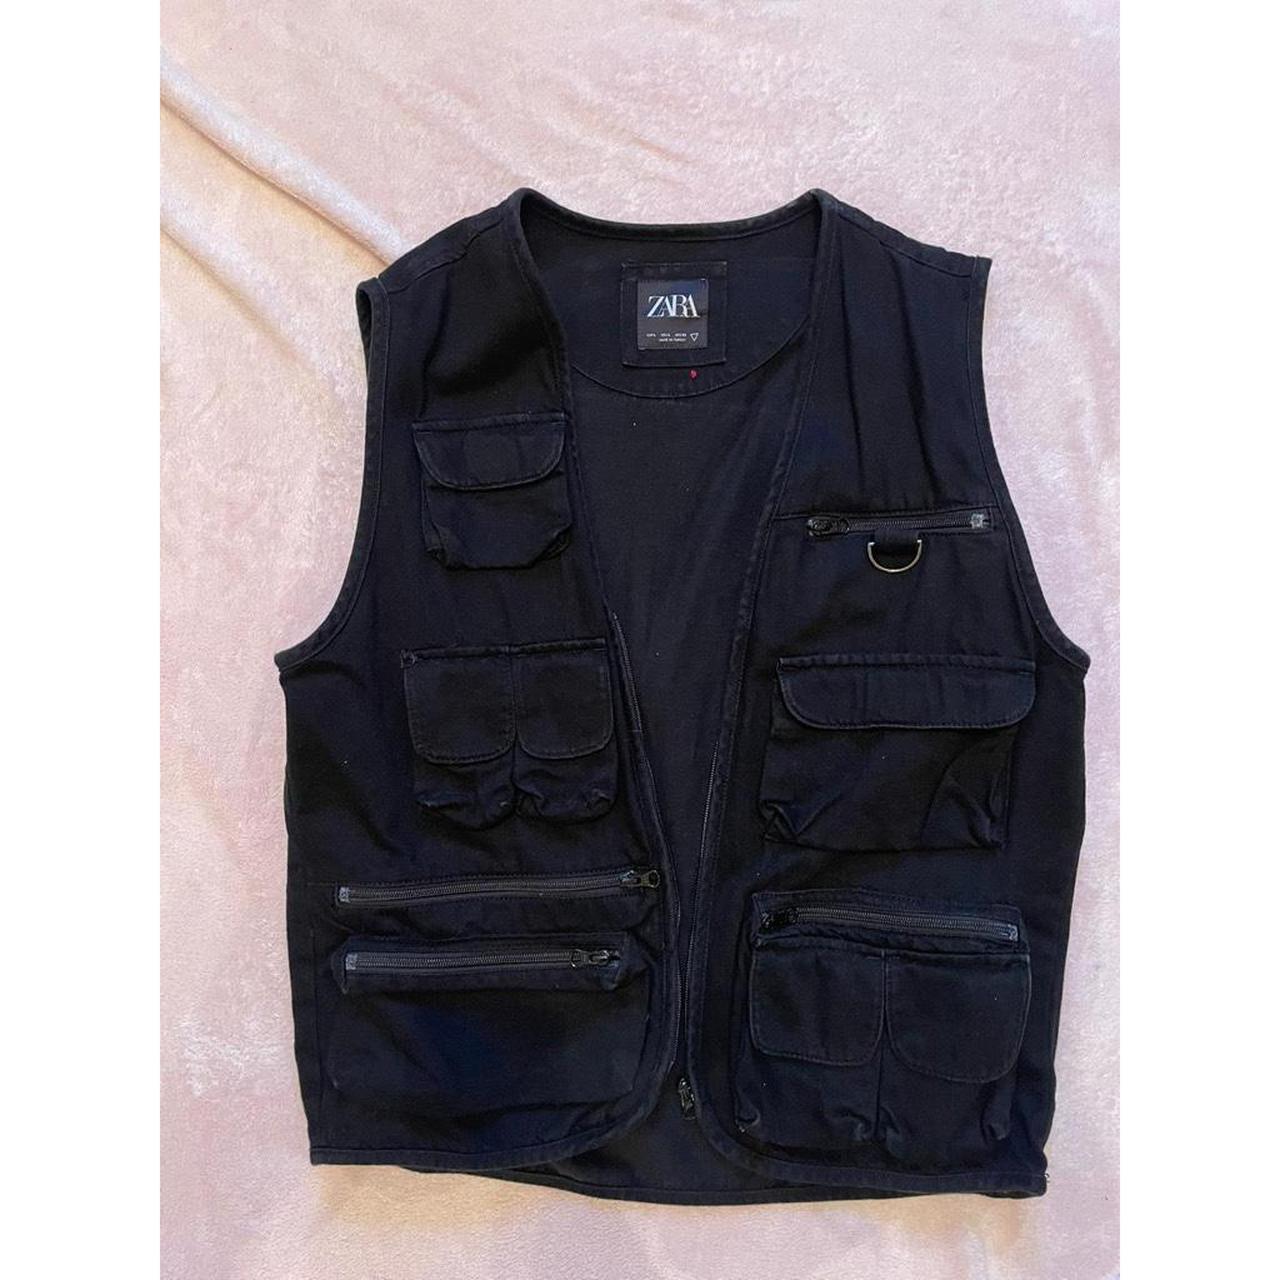 Zara Utility Vest - Black - Size Large Great... - Depop